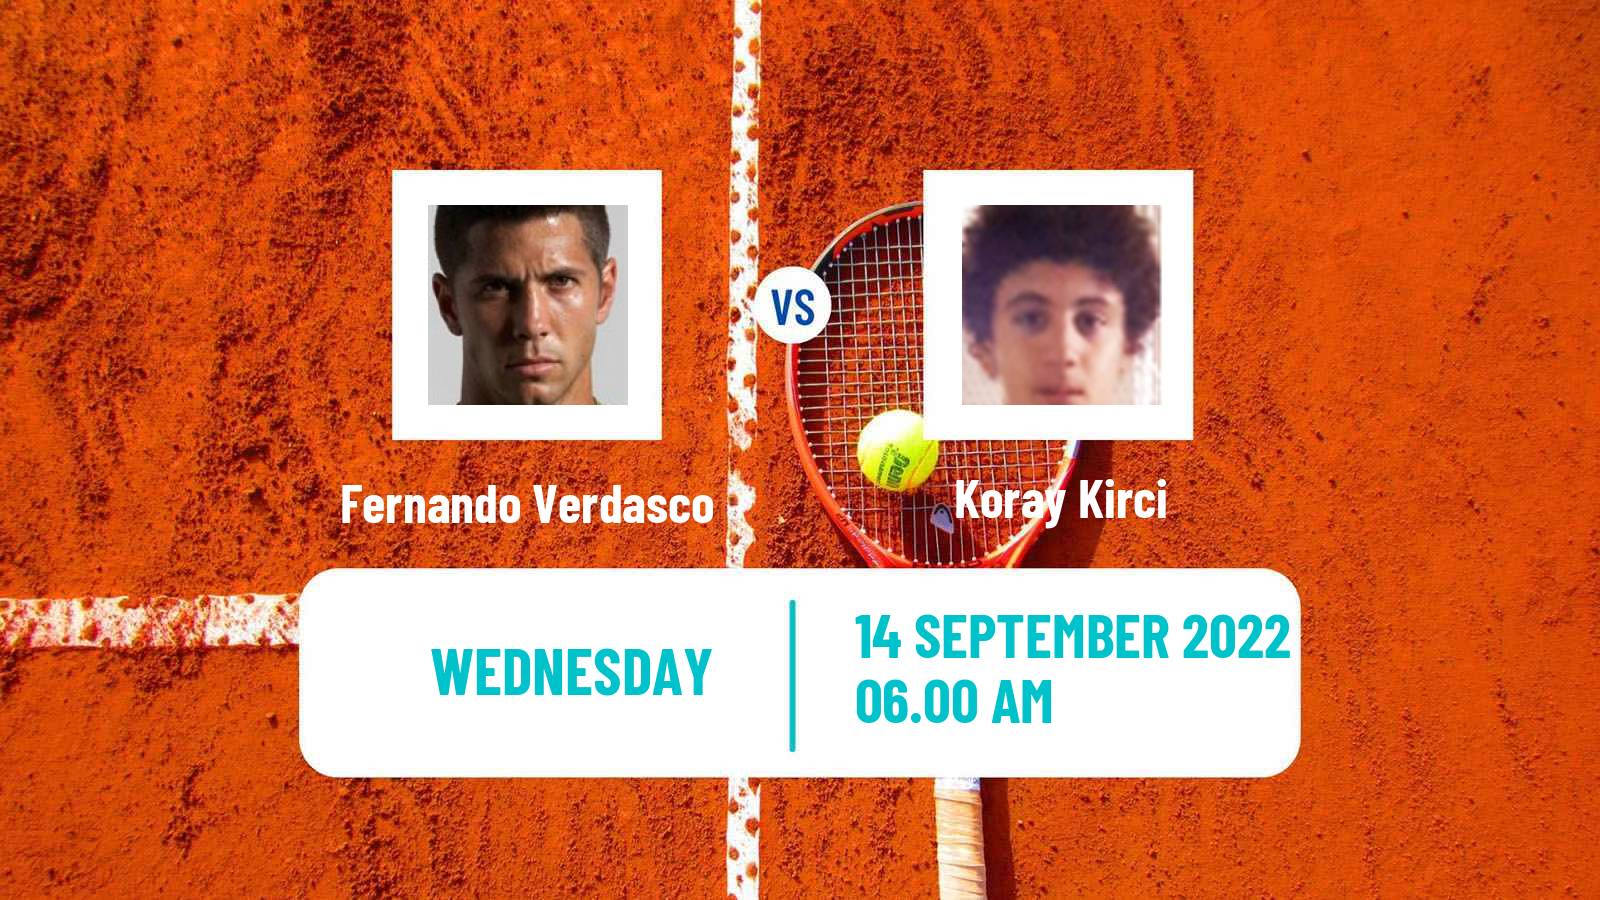 Tennis ATP Challenger Fernando Verdasco - Koray Kirci